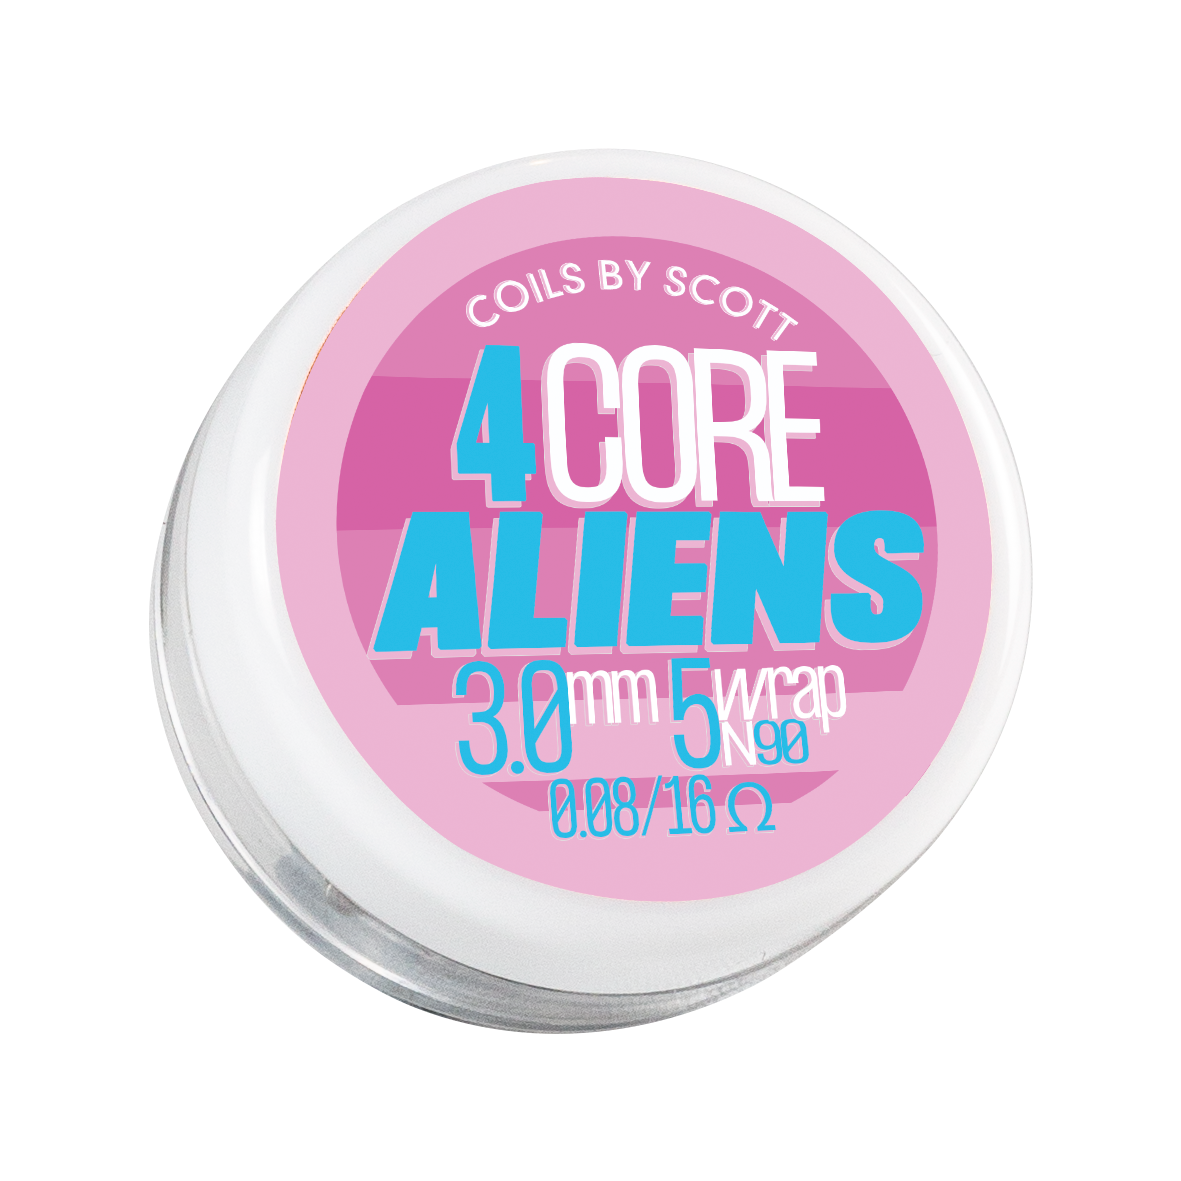 0.08 4 Core Aliens